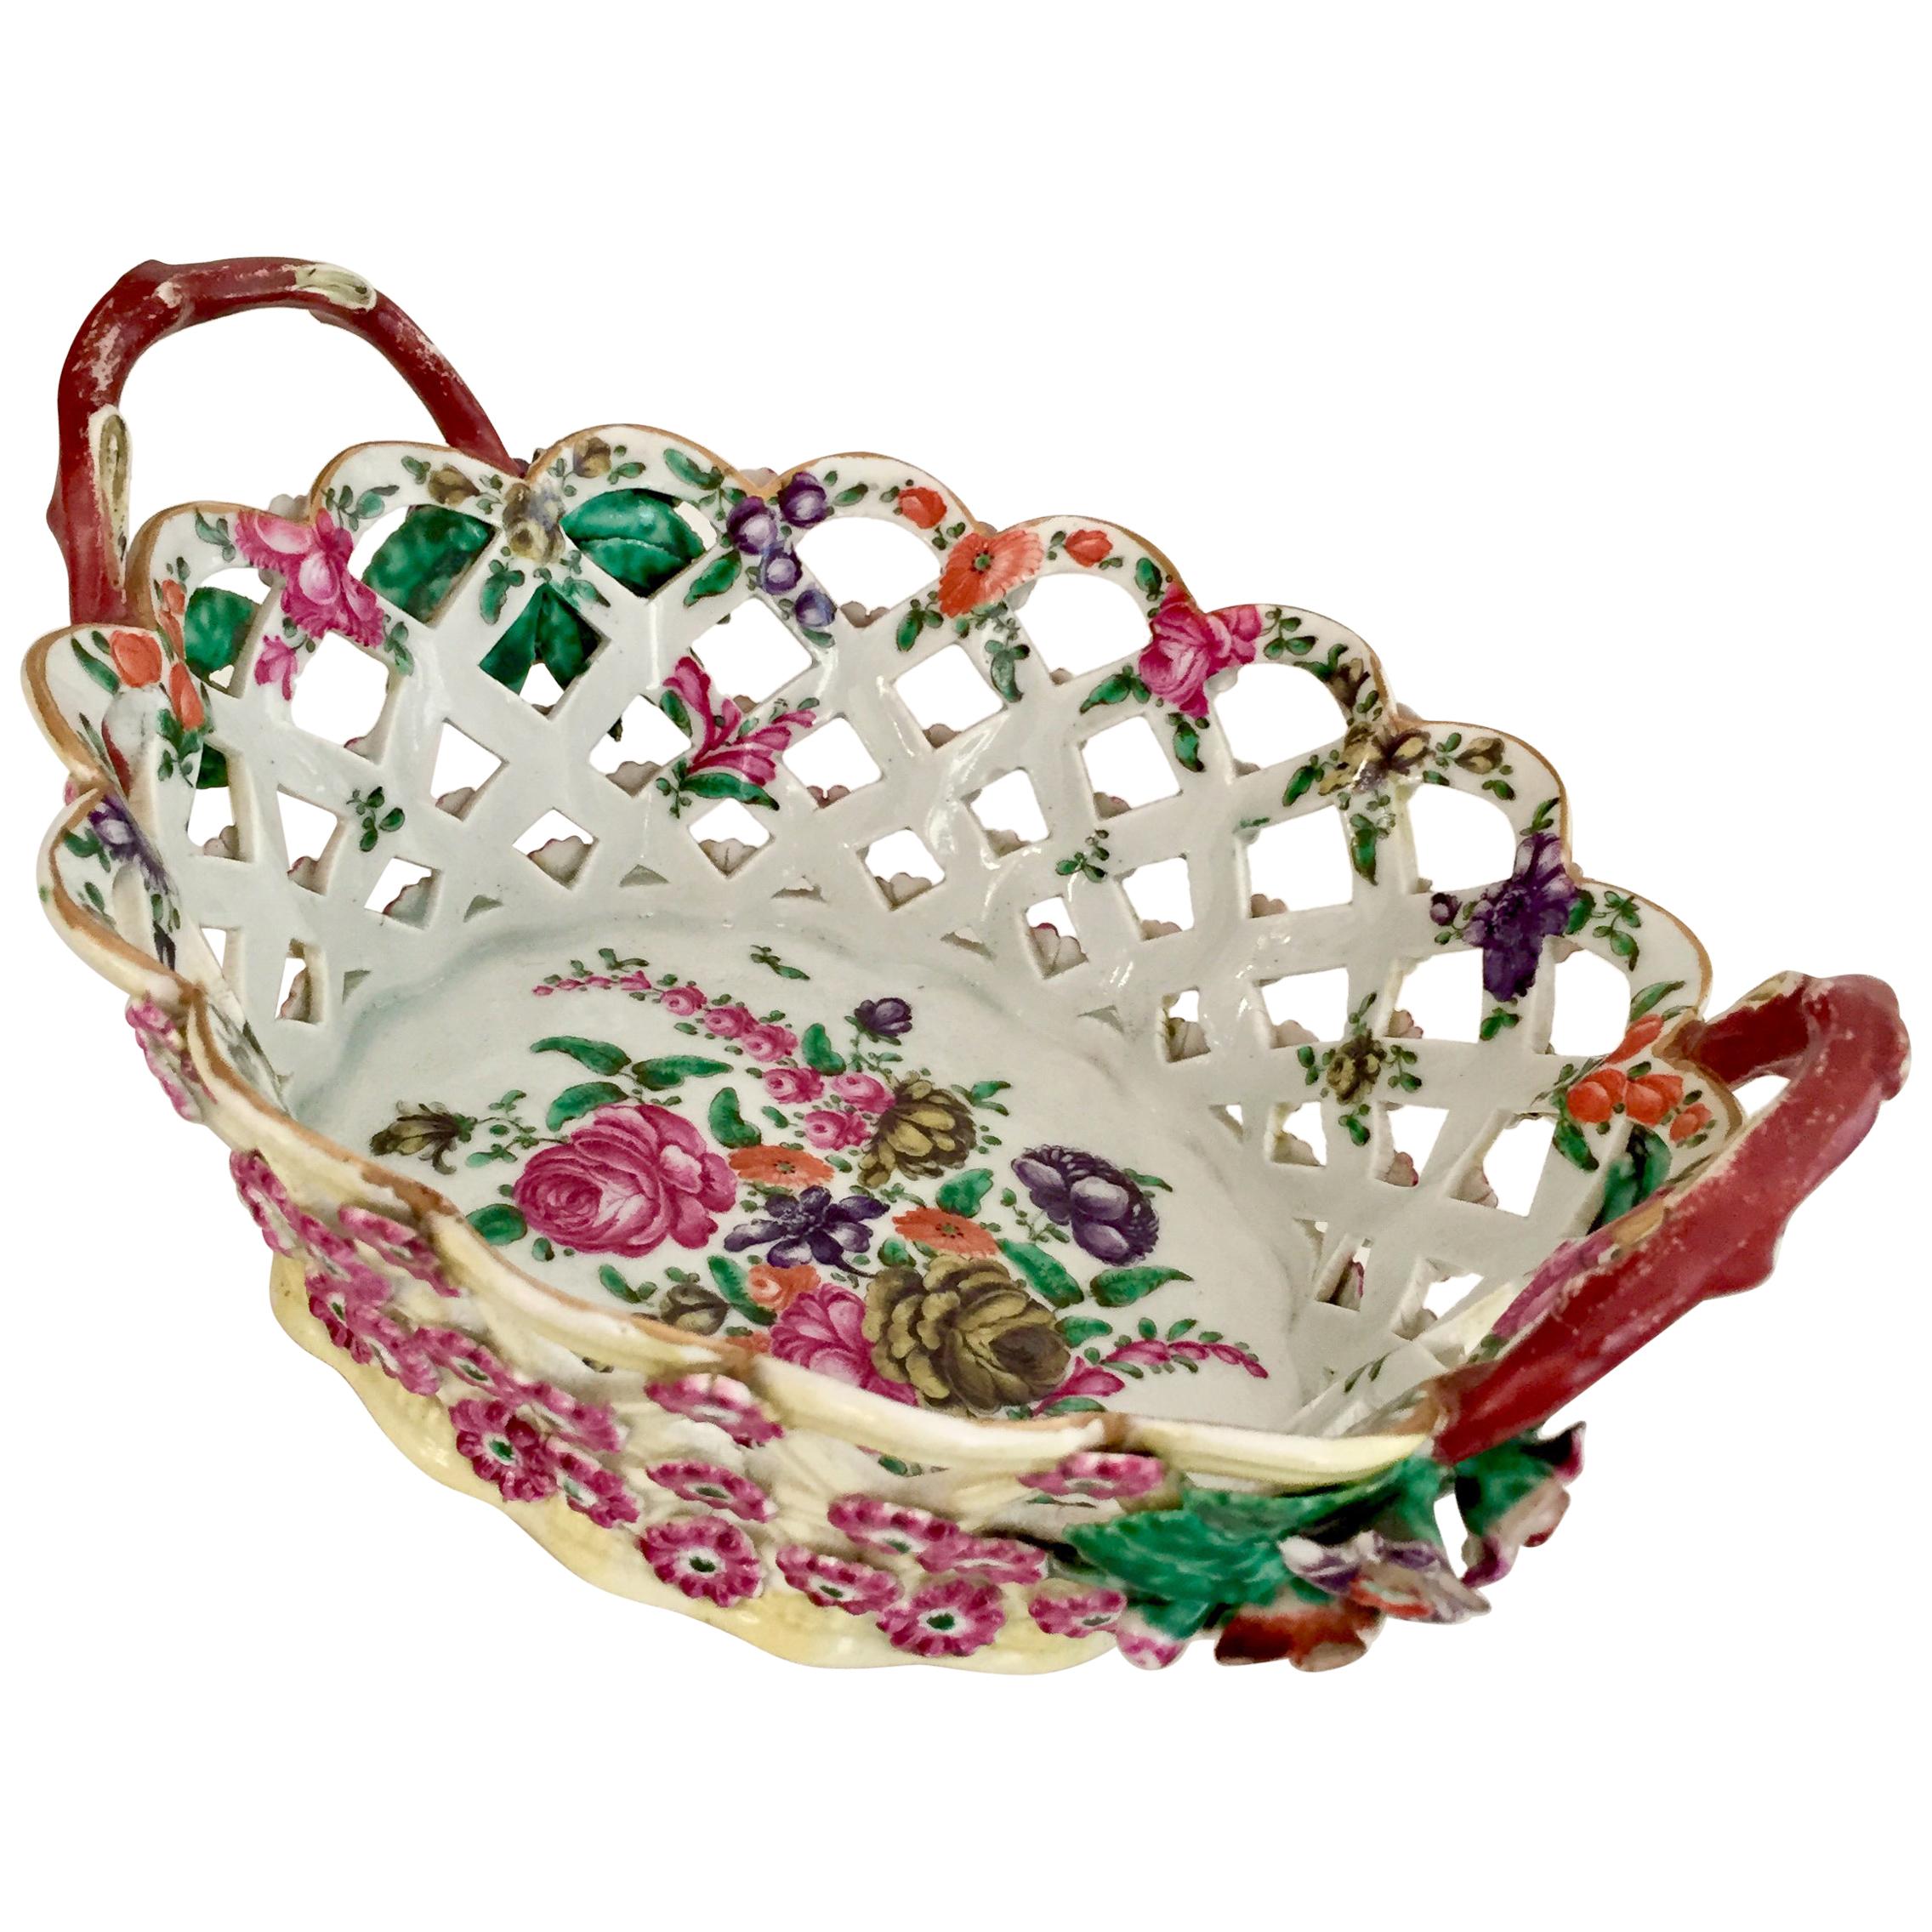 Rare Worcester Chestnut Basket with Provenance, circa 1770